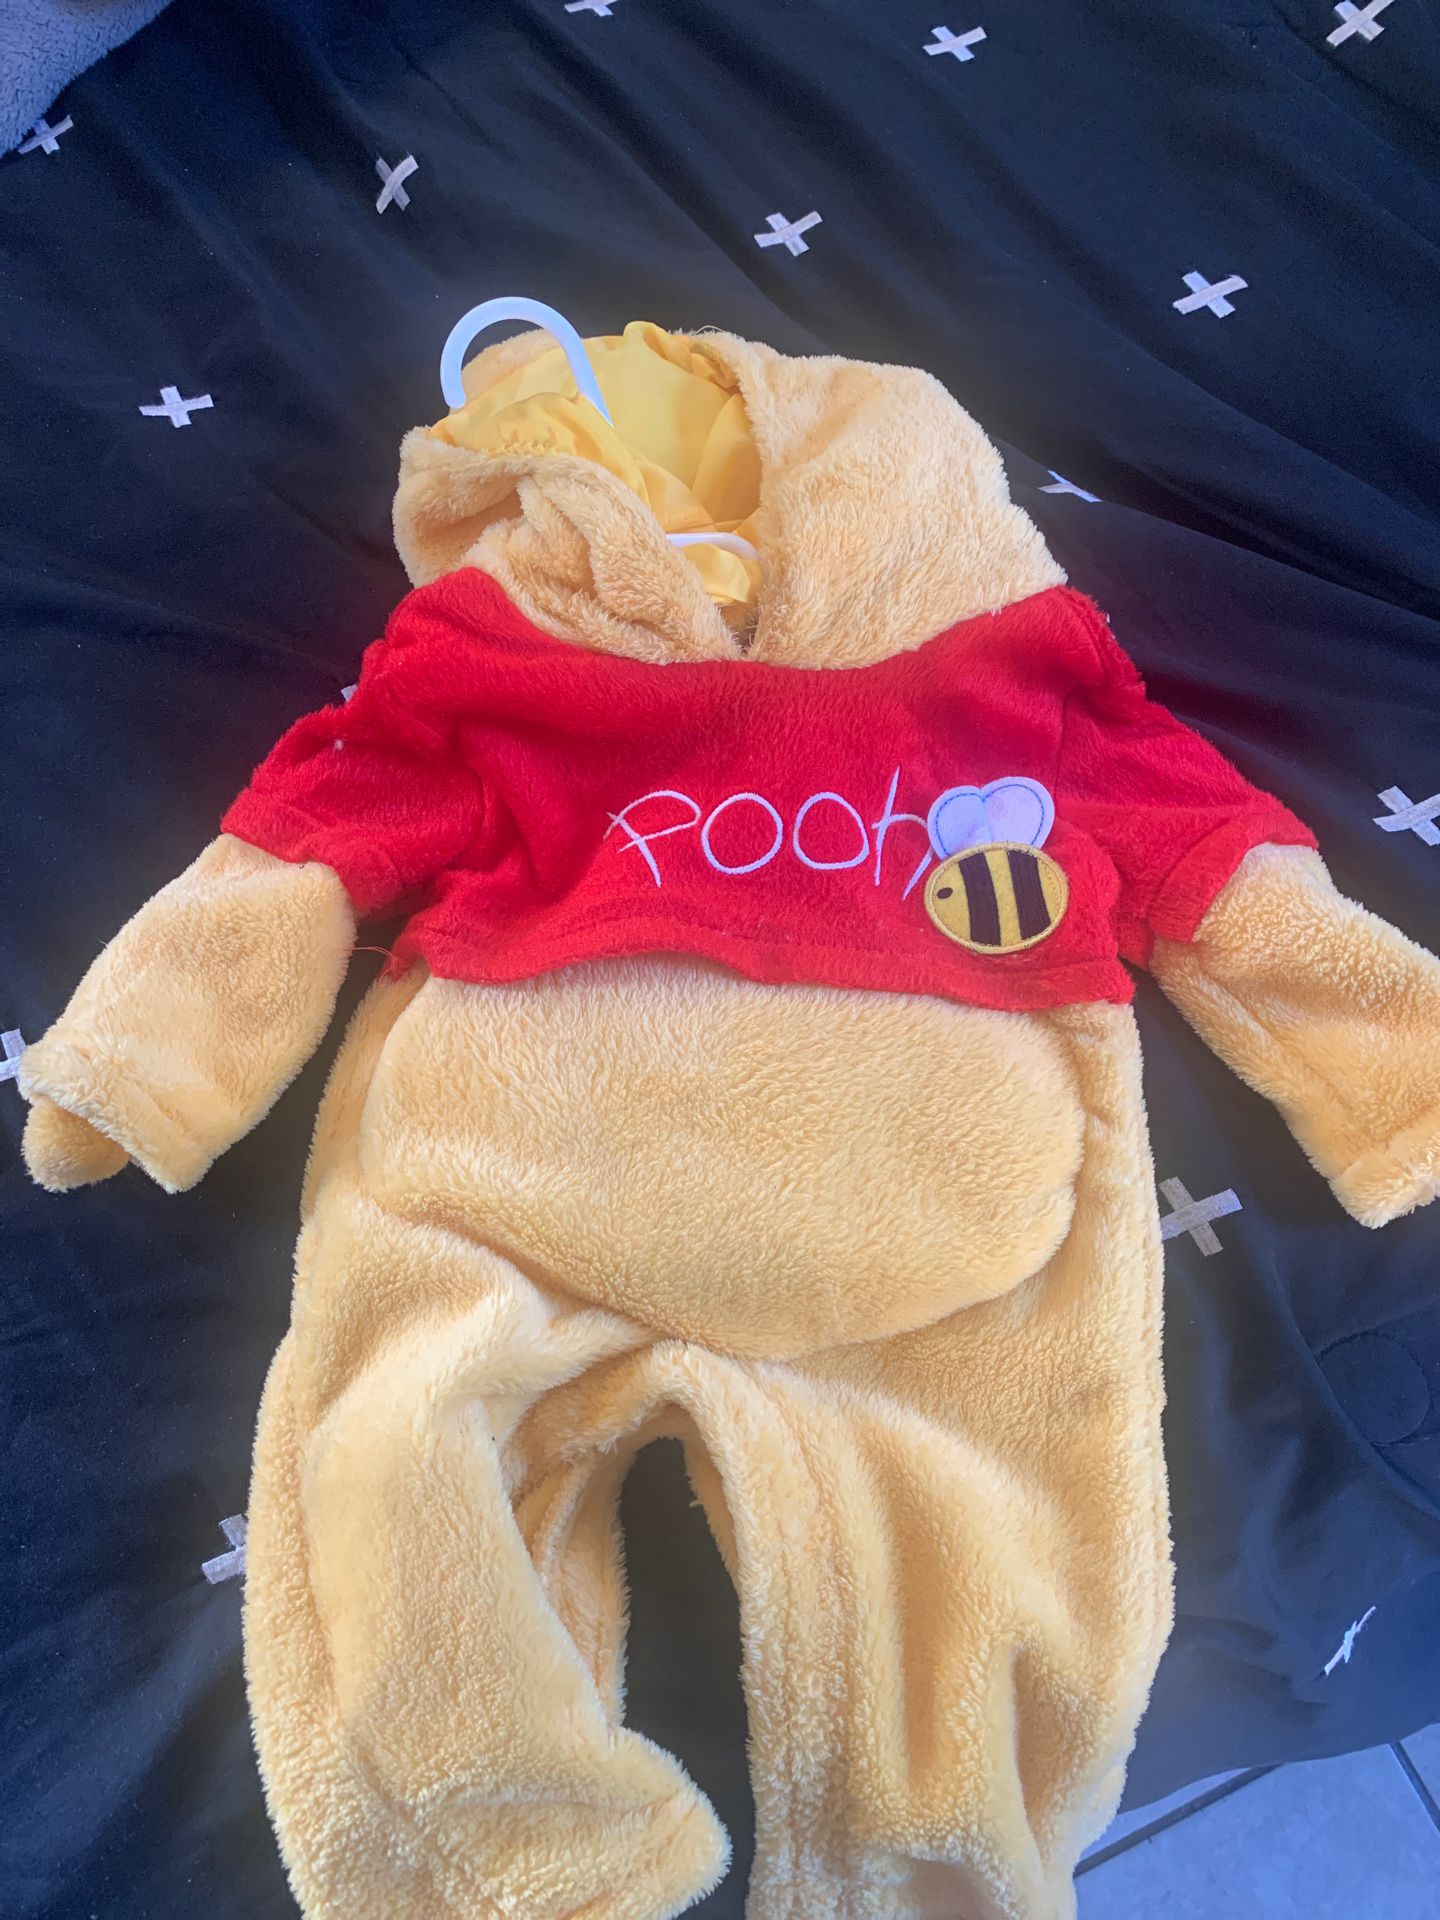 Pooh costume